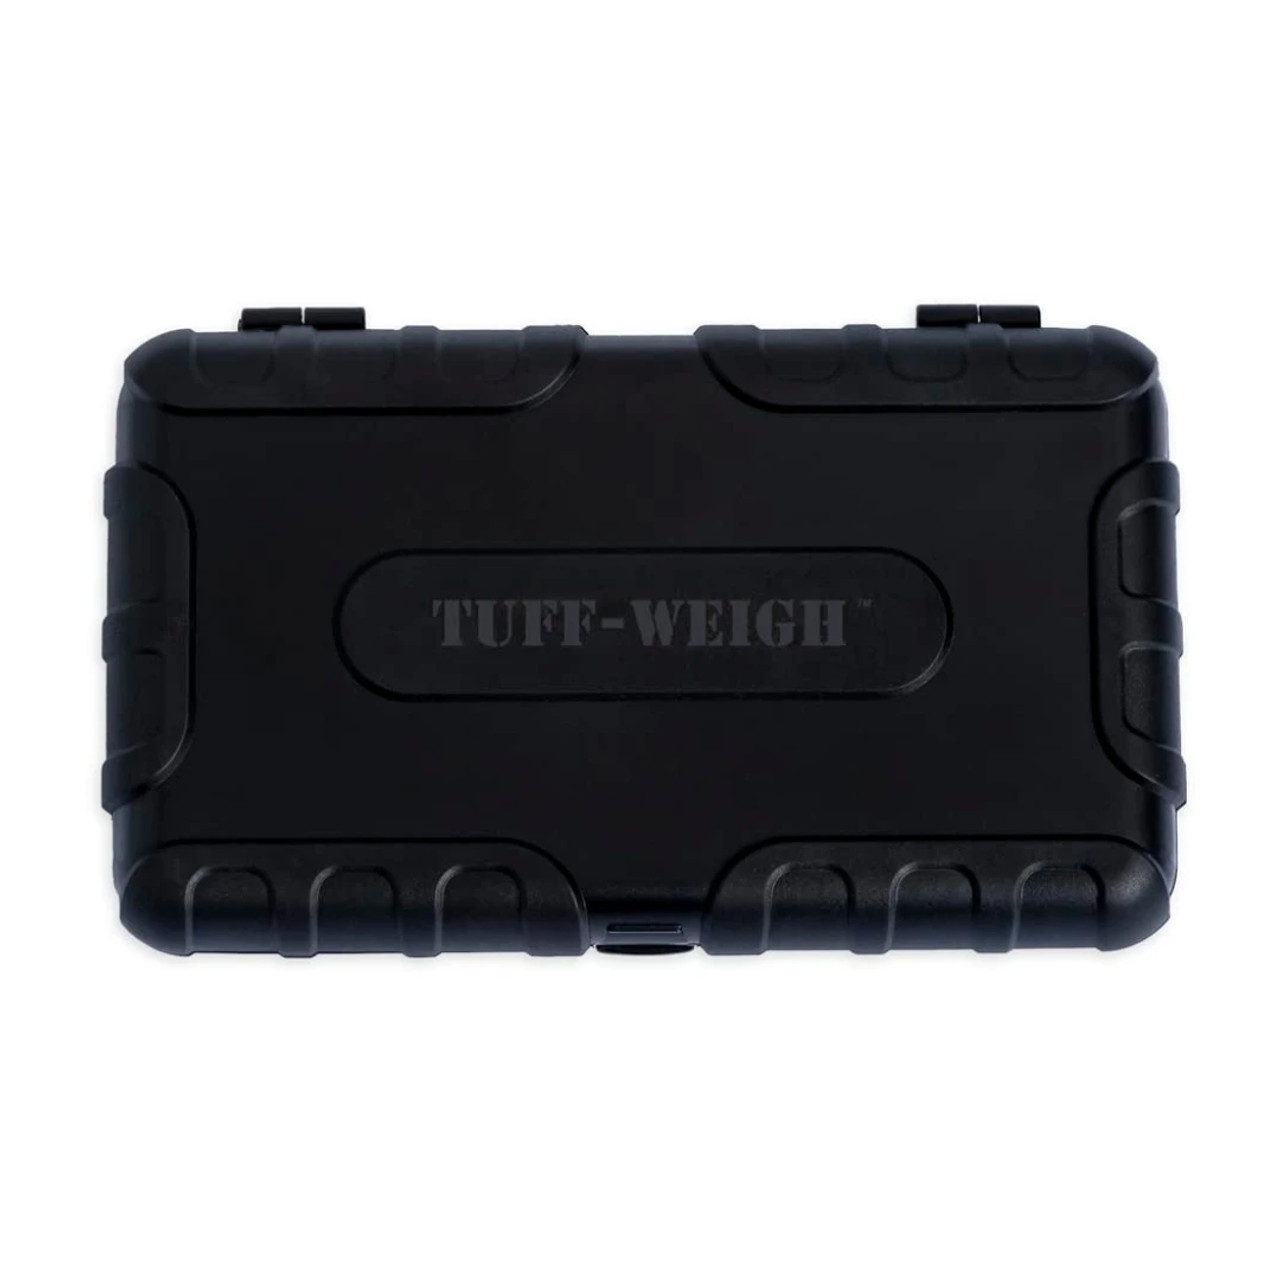 Truweigh General Compact Digital Bench Scale - 3000g x 0.1g - Black